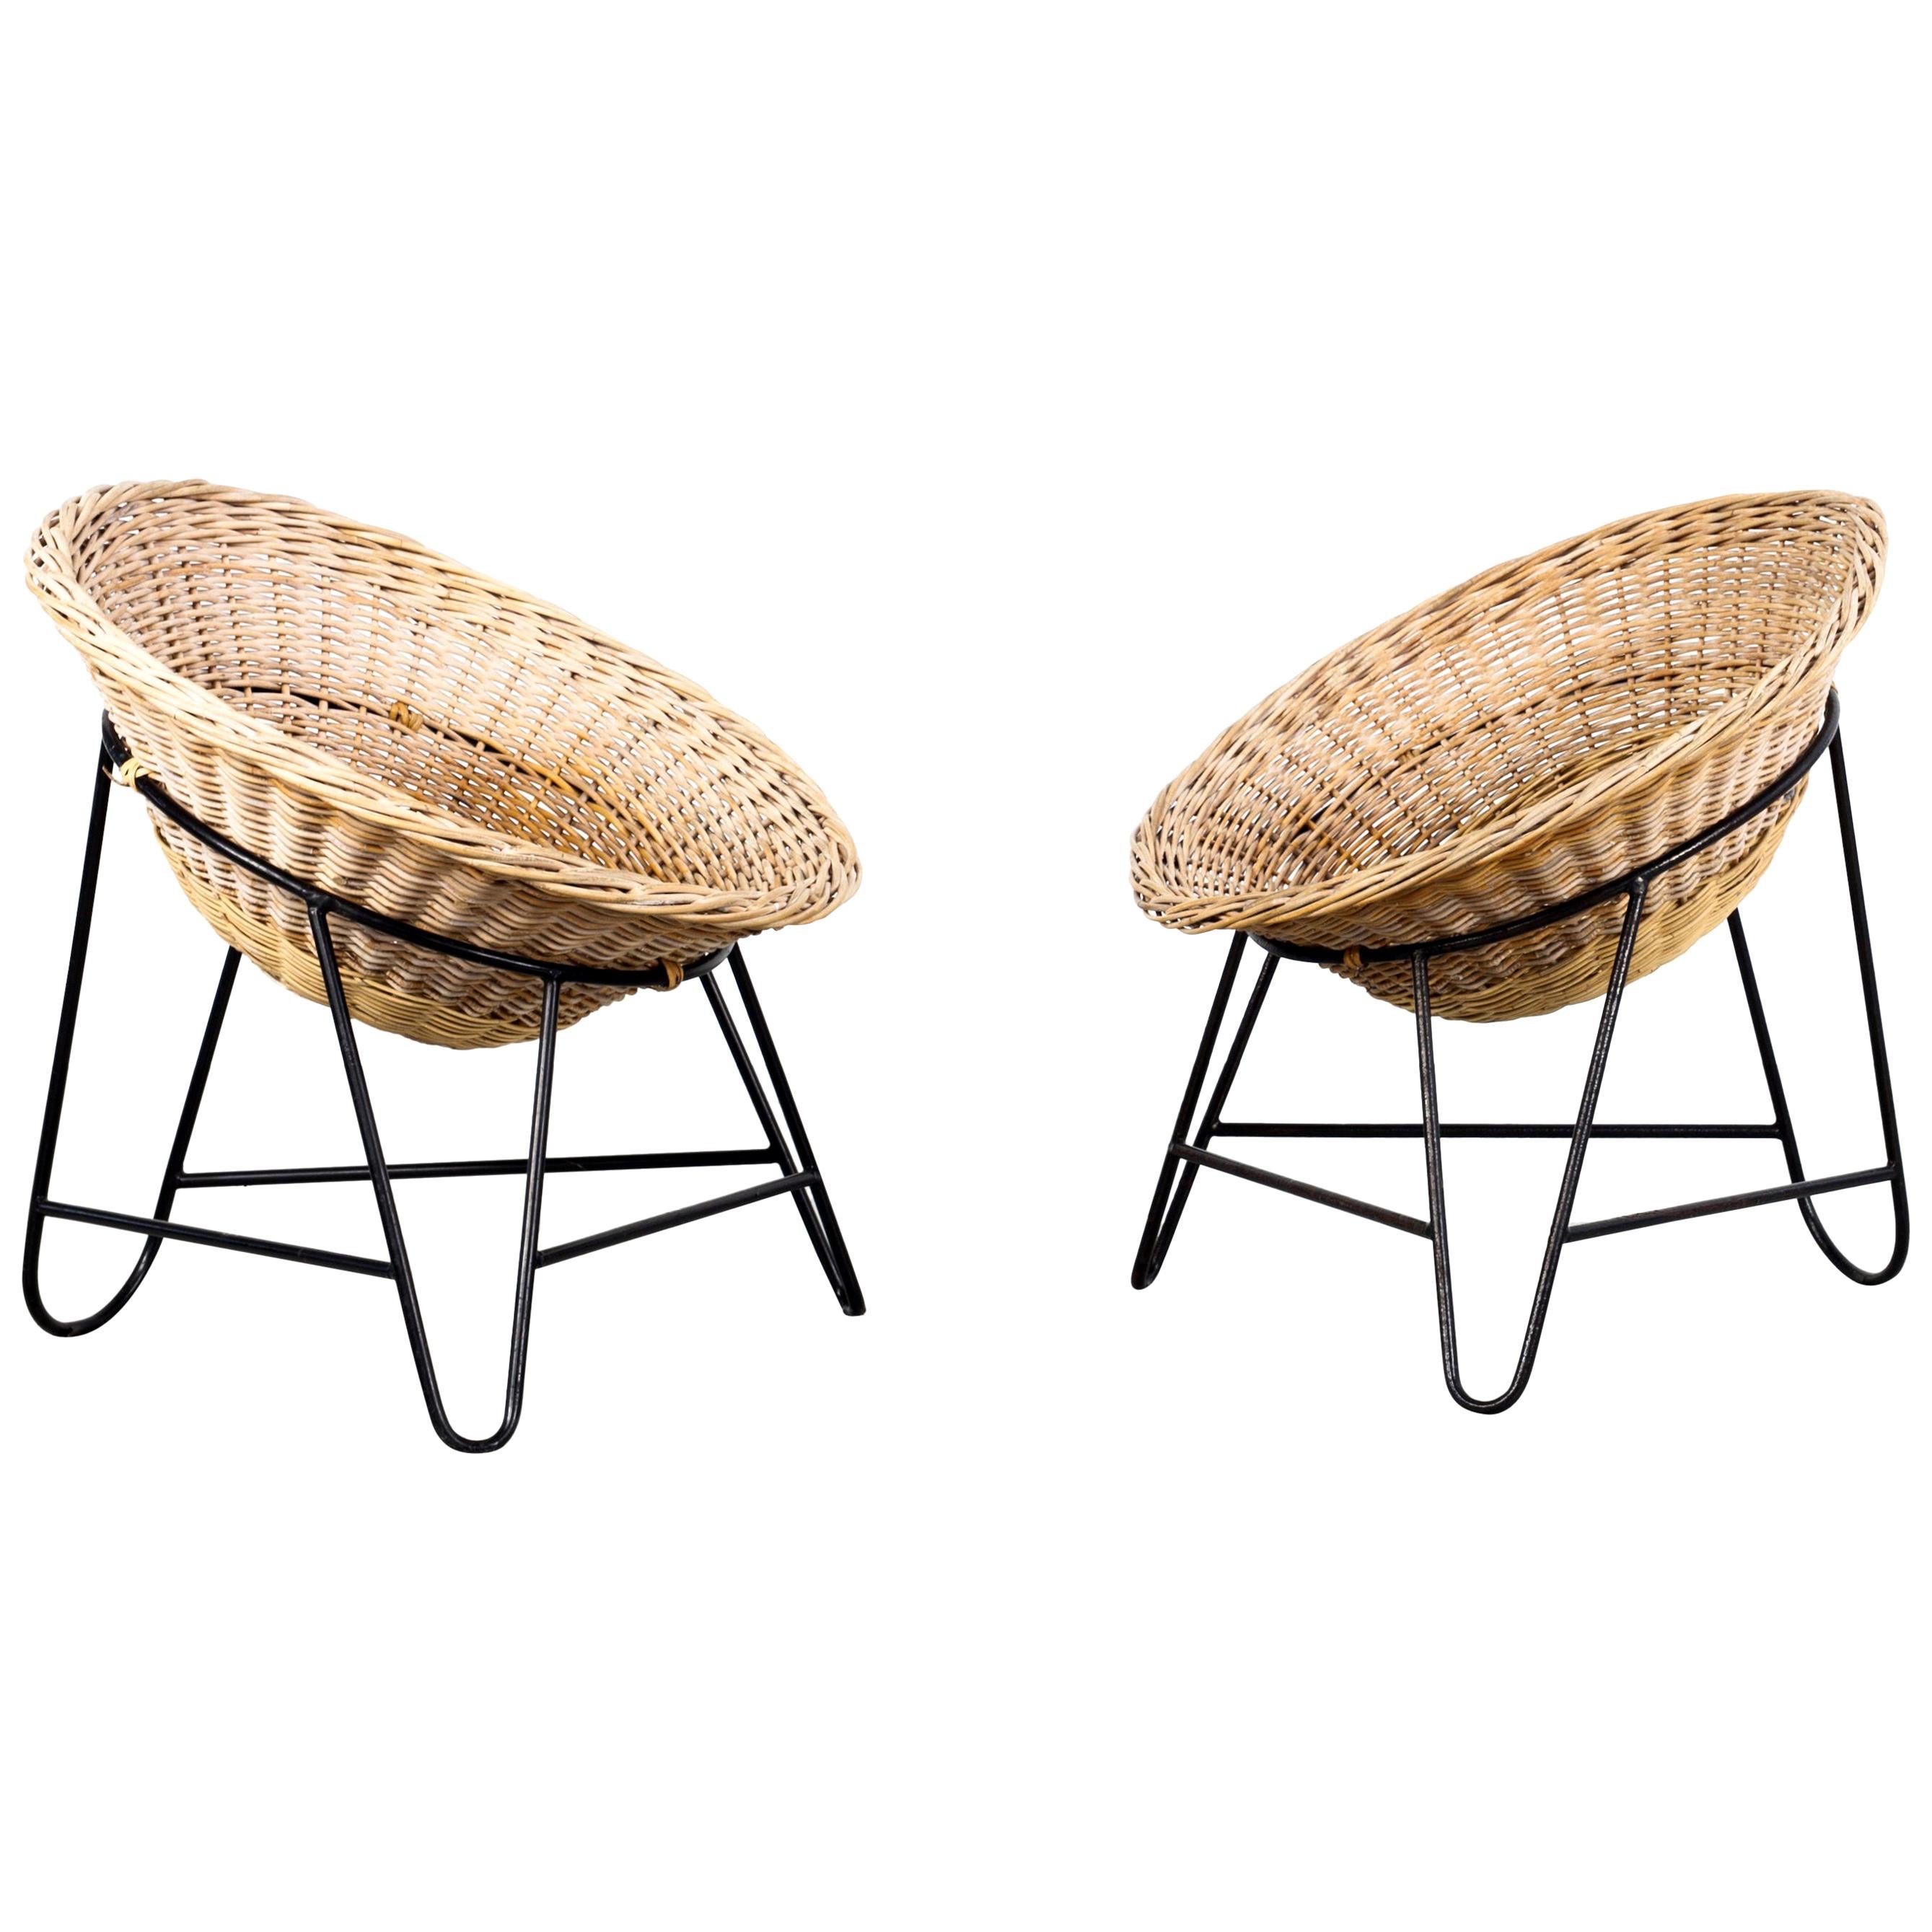 Italian Mid-Century Modern light brown coconut-shaped Rattan Basket Chair, 1950 For Sale